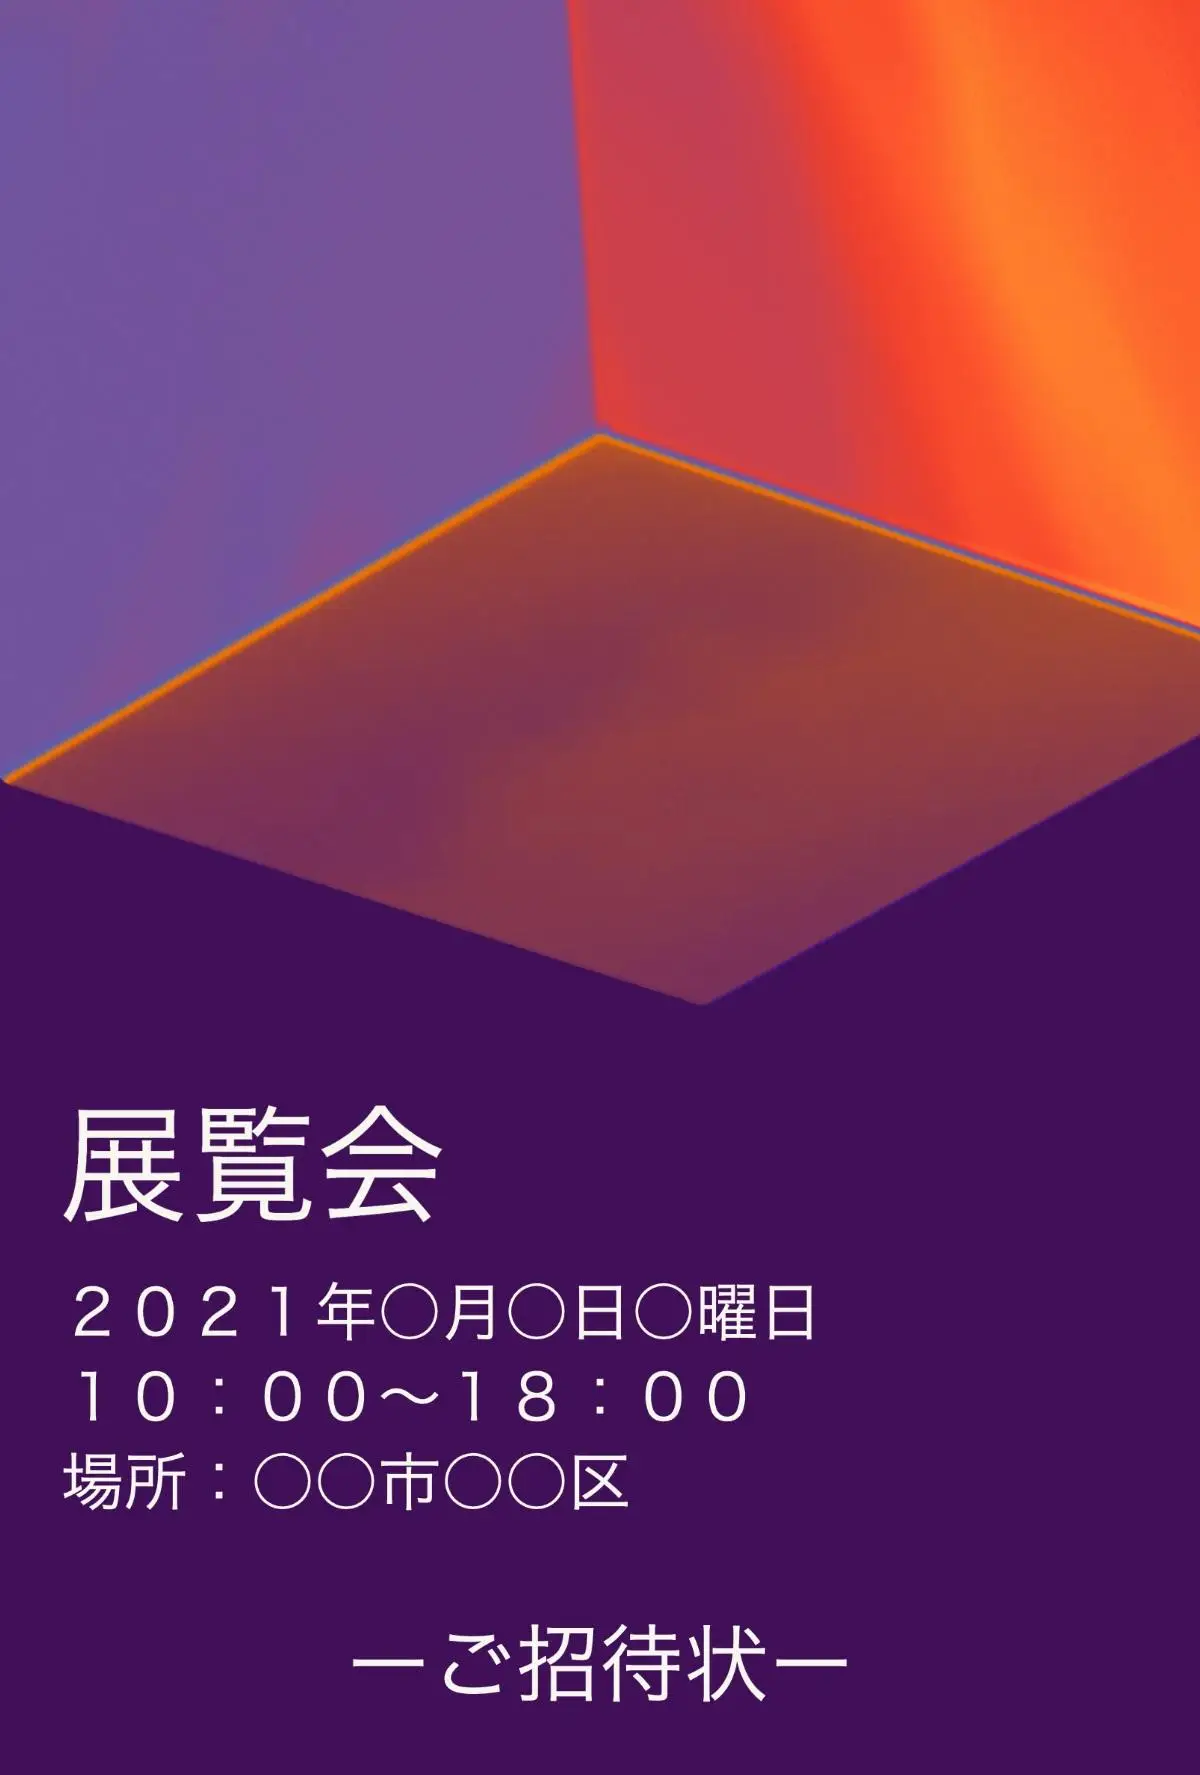 Purple 3d shapes showroom invitation